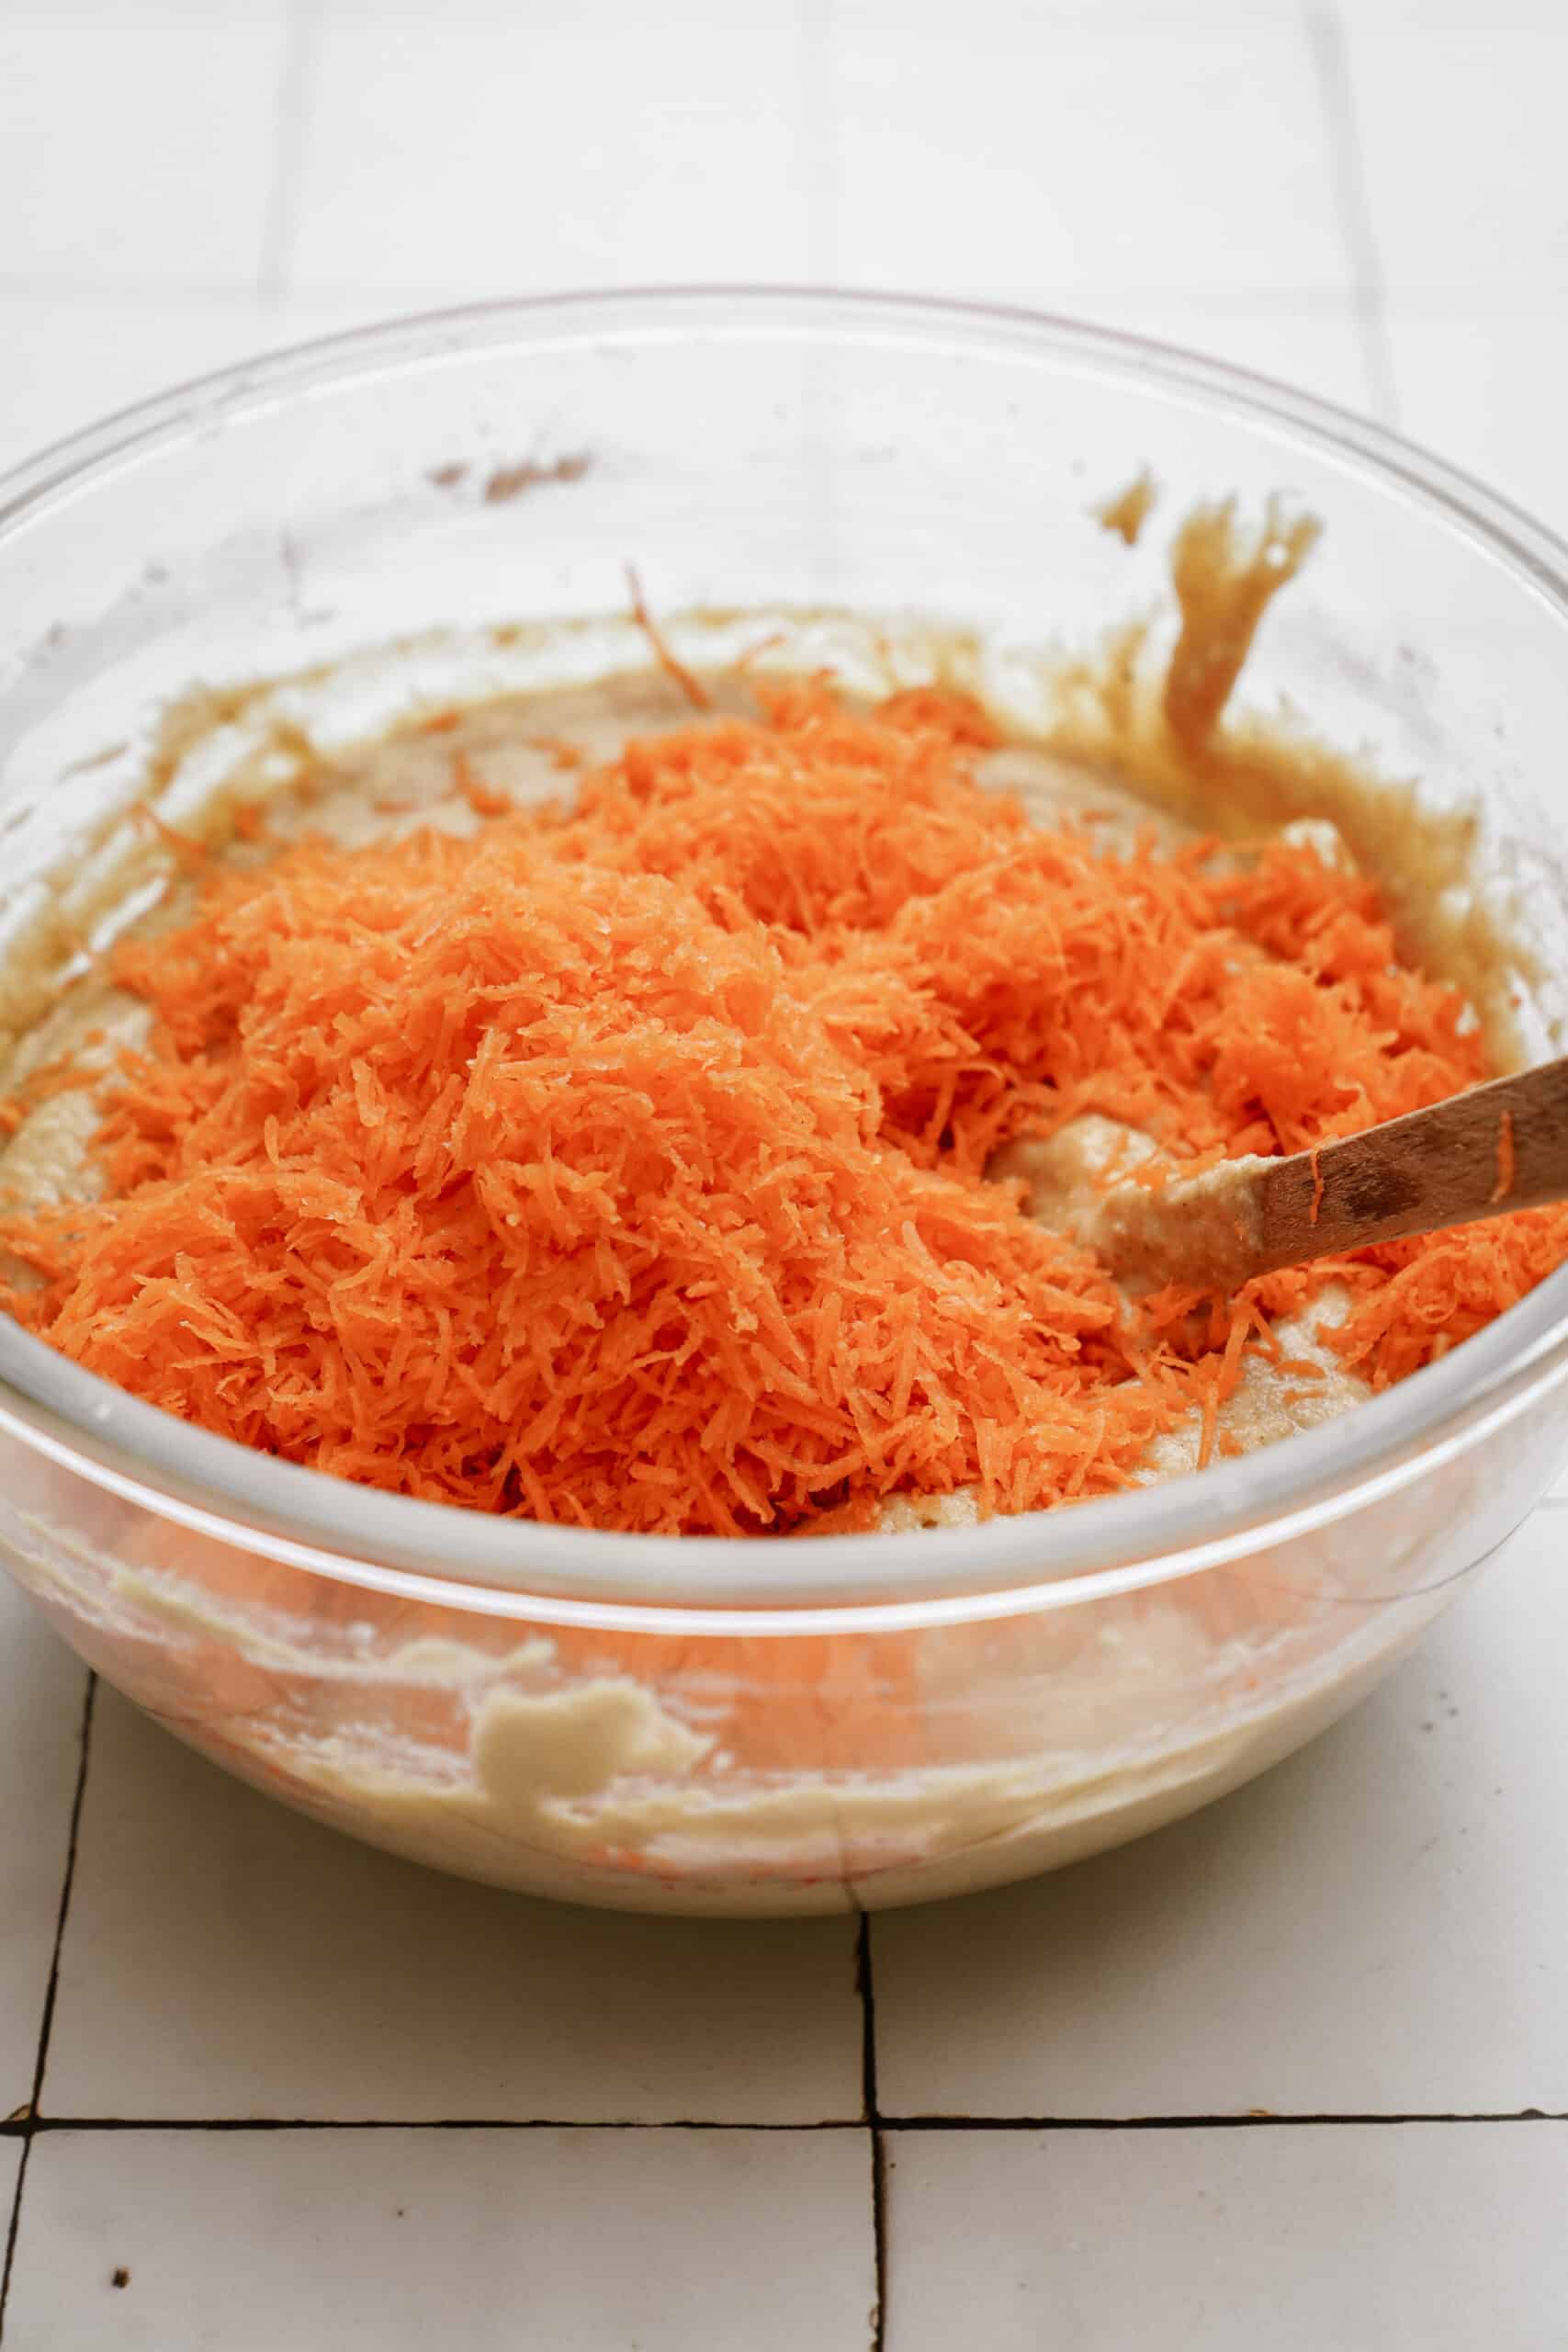 Shredded carrots in cake mix